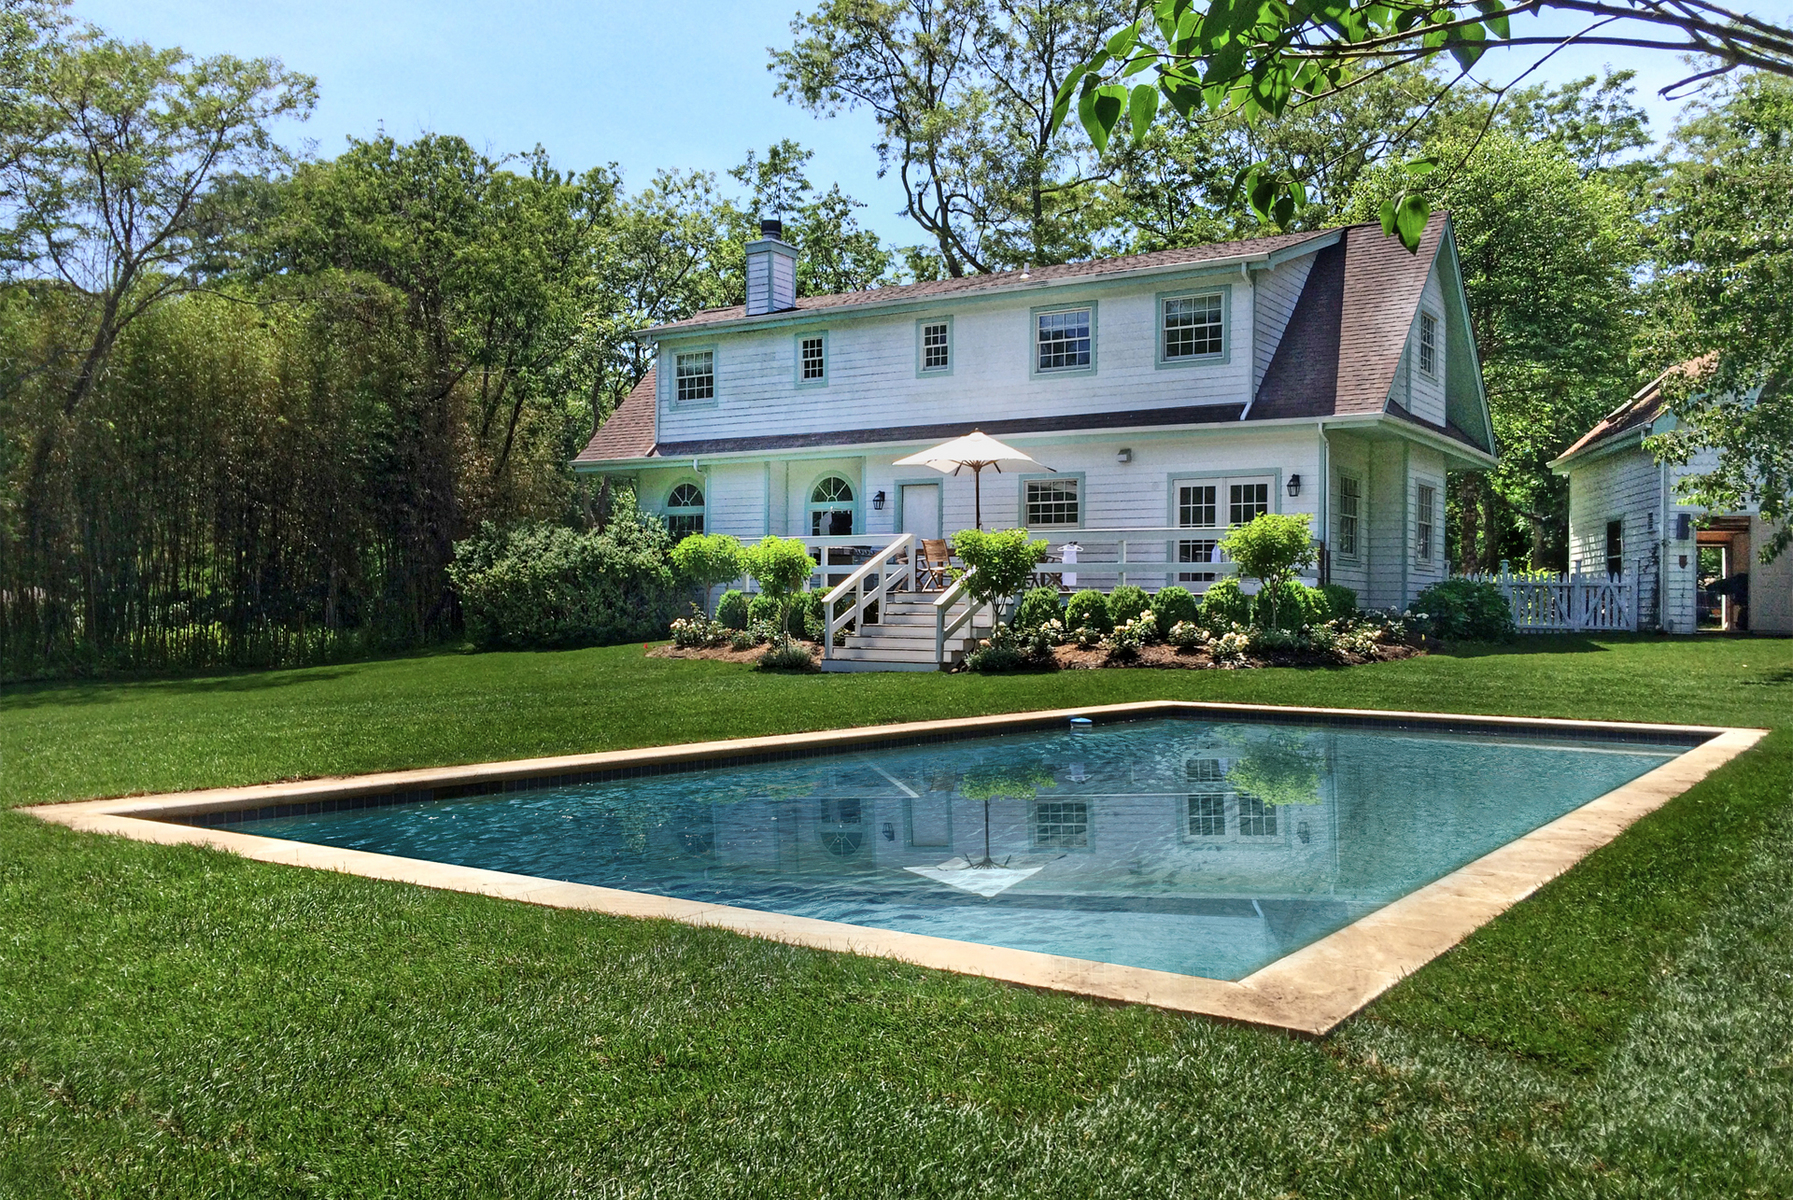 Rental Property at Bridgehampton, Bridgehampton, Hamptons, NY - Bedrooms: 3 
Bathrooms: 2.5  - $40,000 MO.